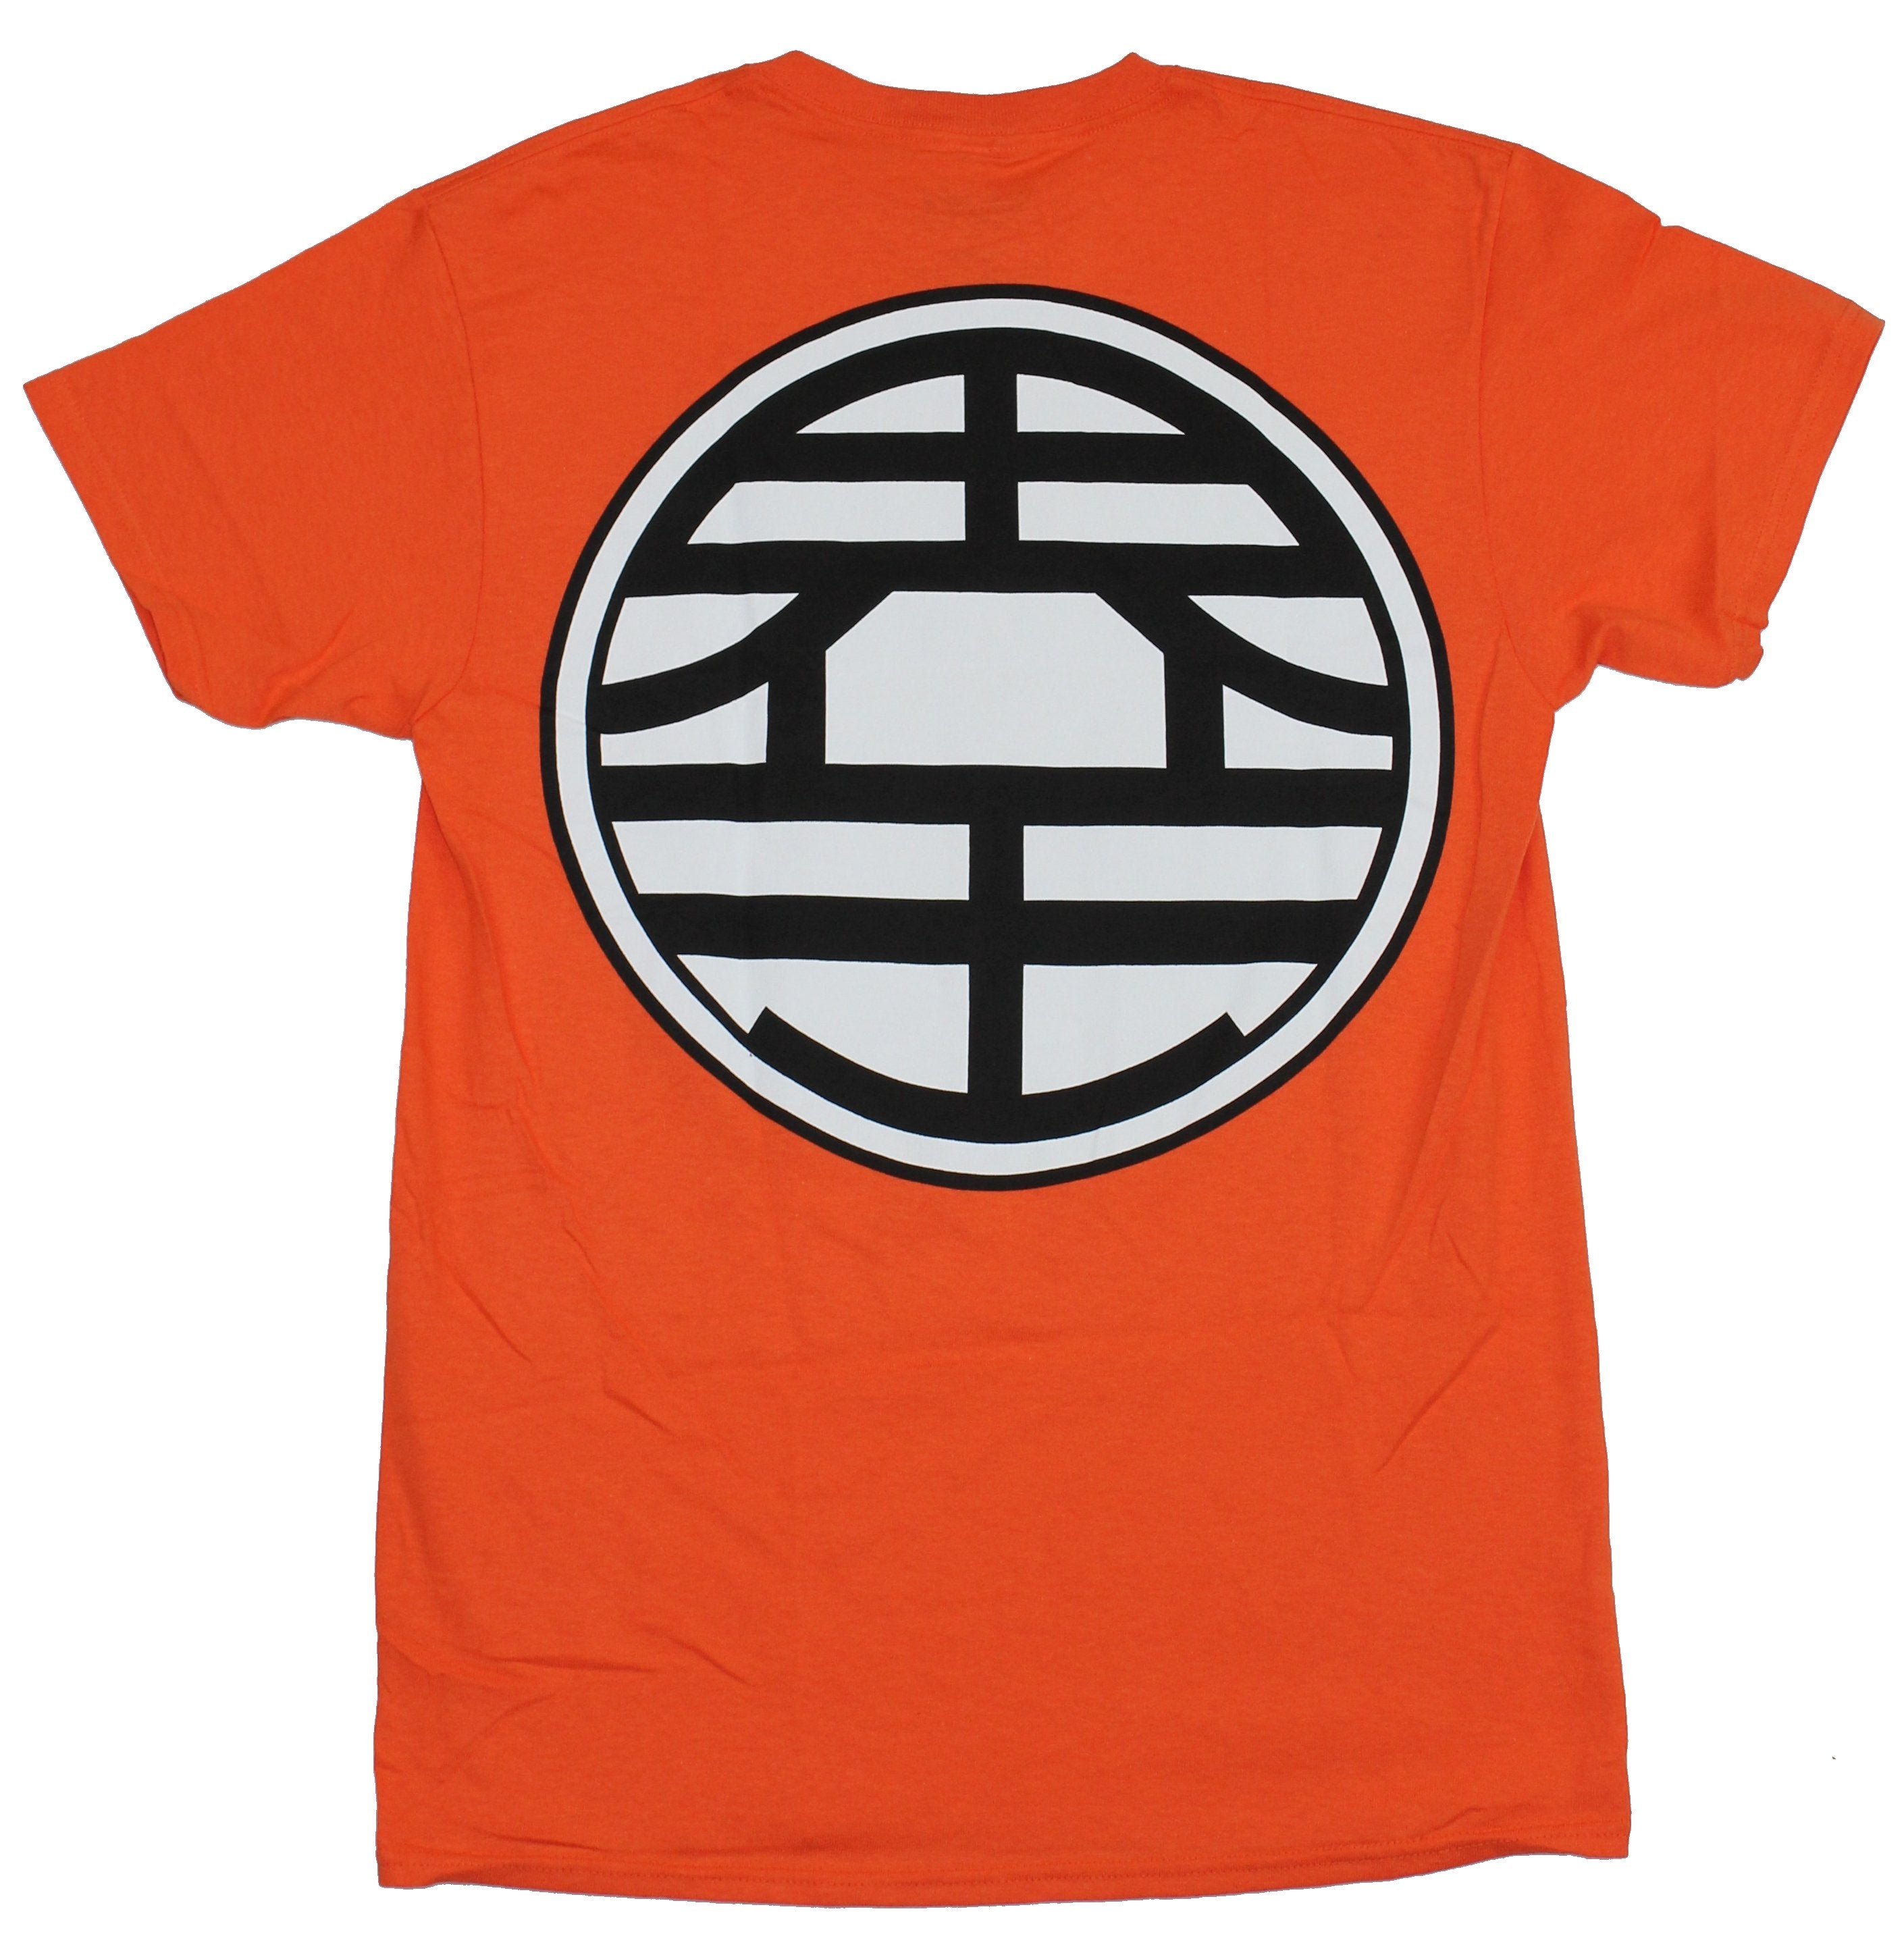 Dragon Ball Z Mens T-Shirt - Goku Kame Costume Shirt Front and Back